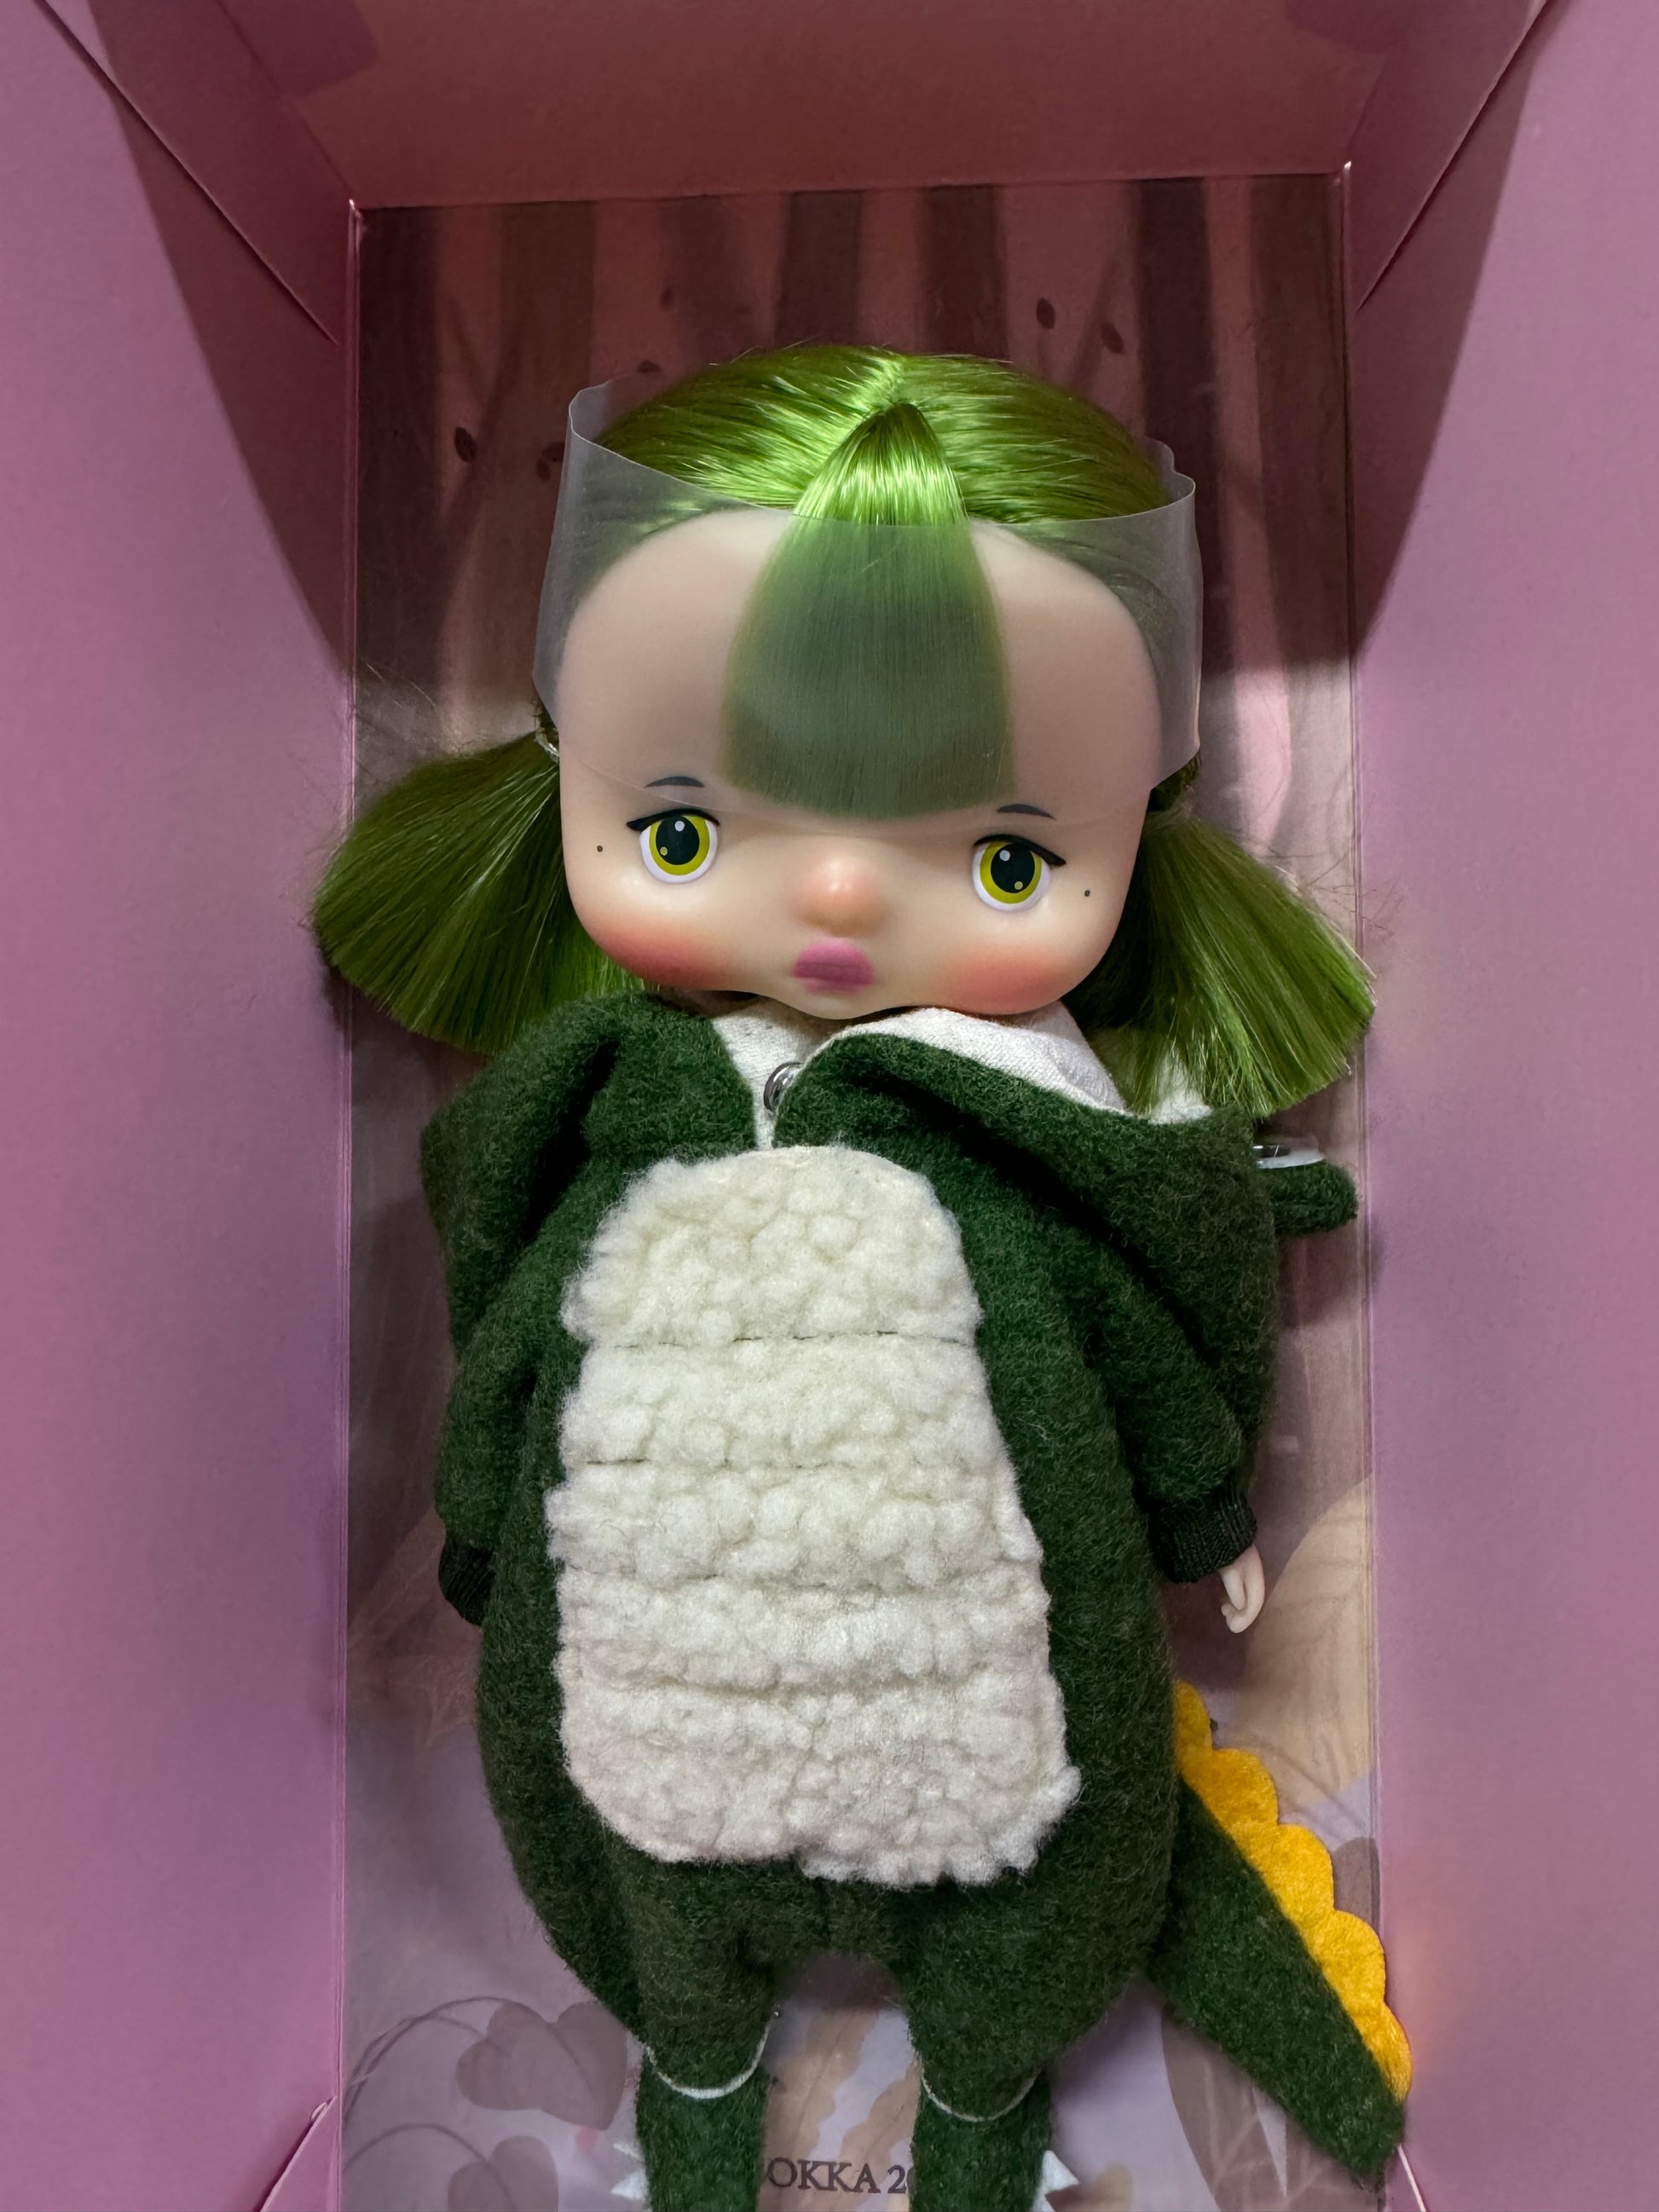 China Artist Bokka - Crocodile Thailand Doll Show Limited NEW Artist Doll like Holala